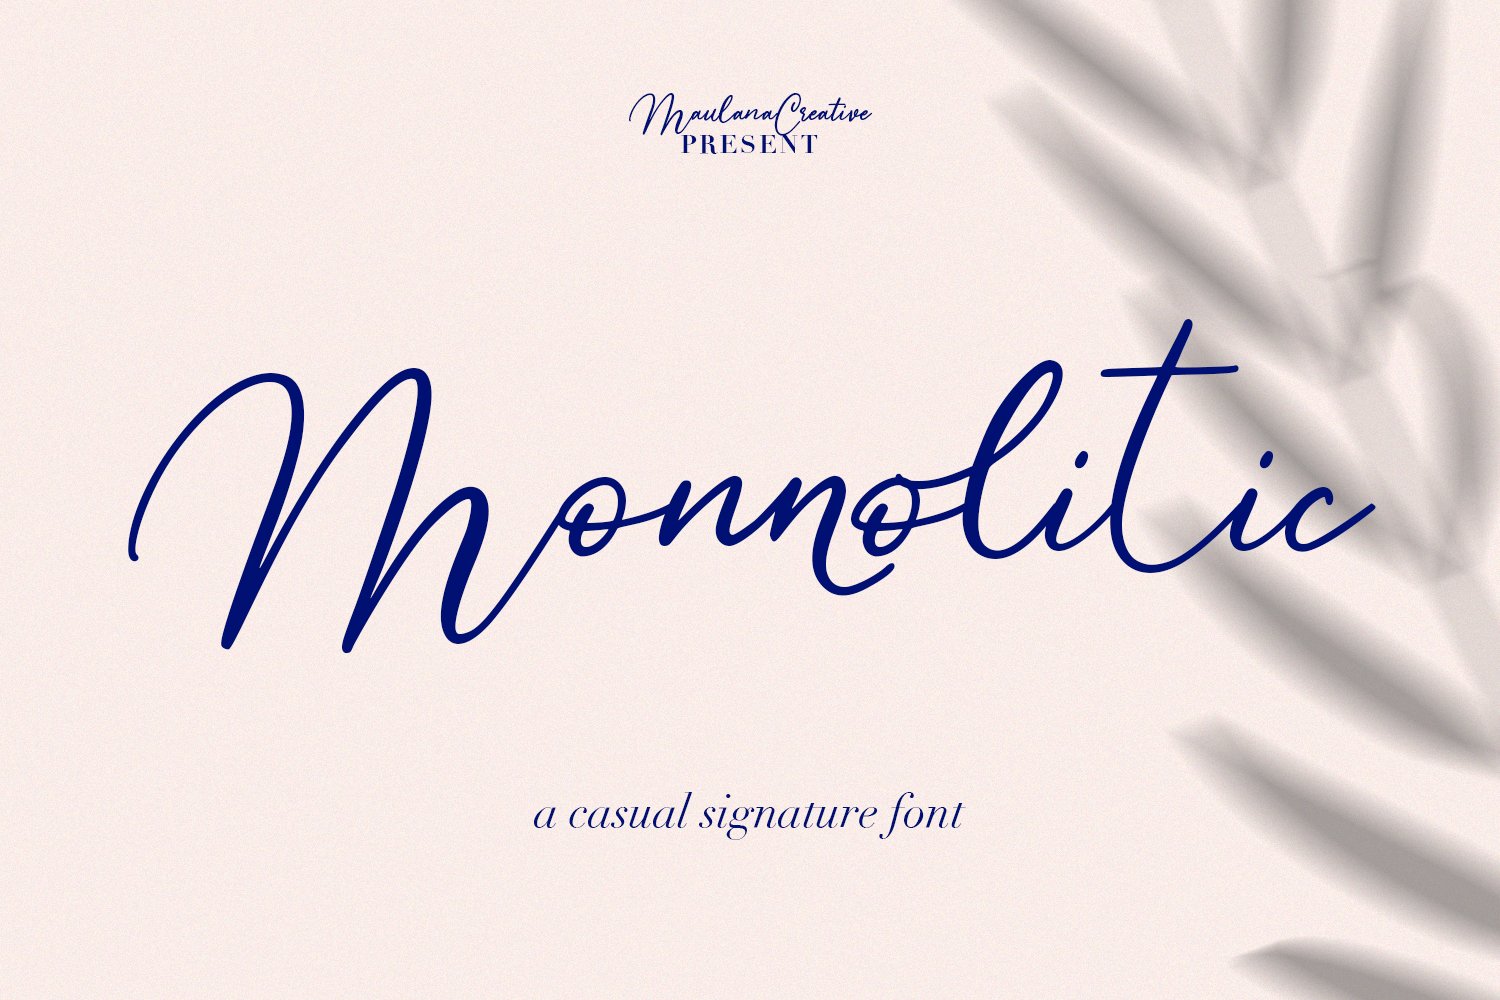 Monnolitic Casual Signature Font cover image.